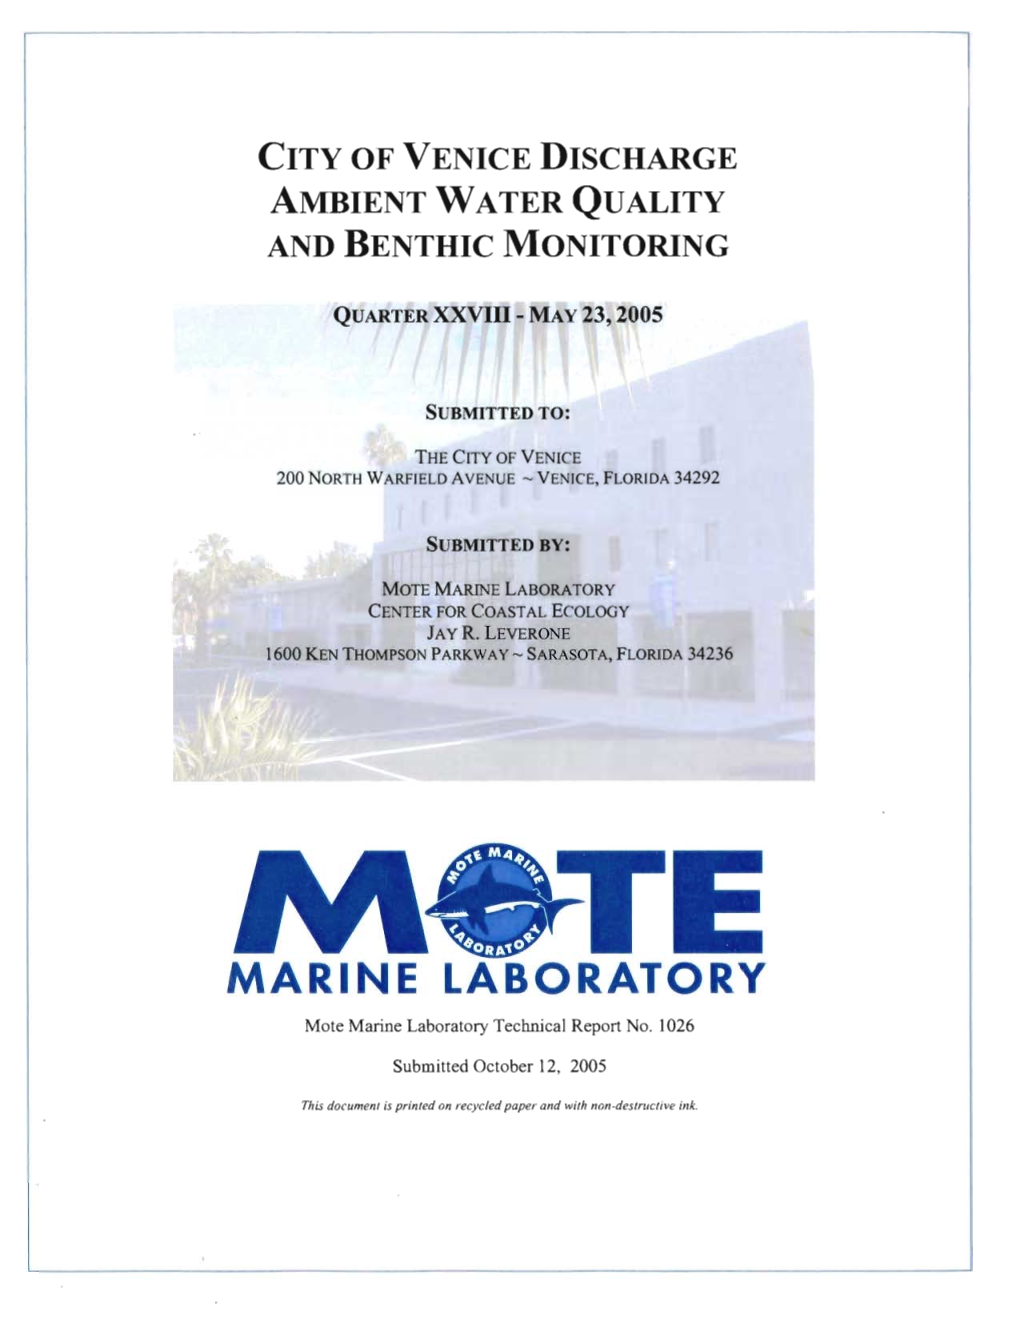 Mote Marine Laboratory Center for Coastal Ecology Jay R